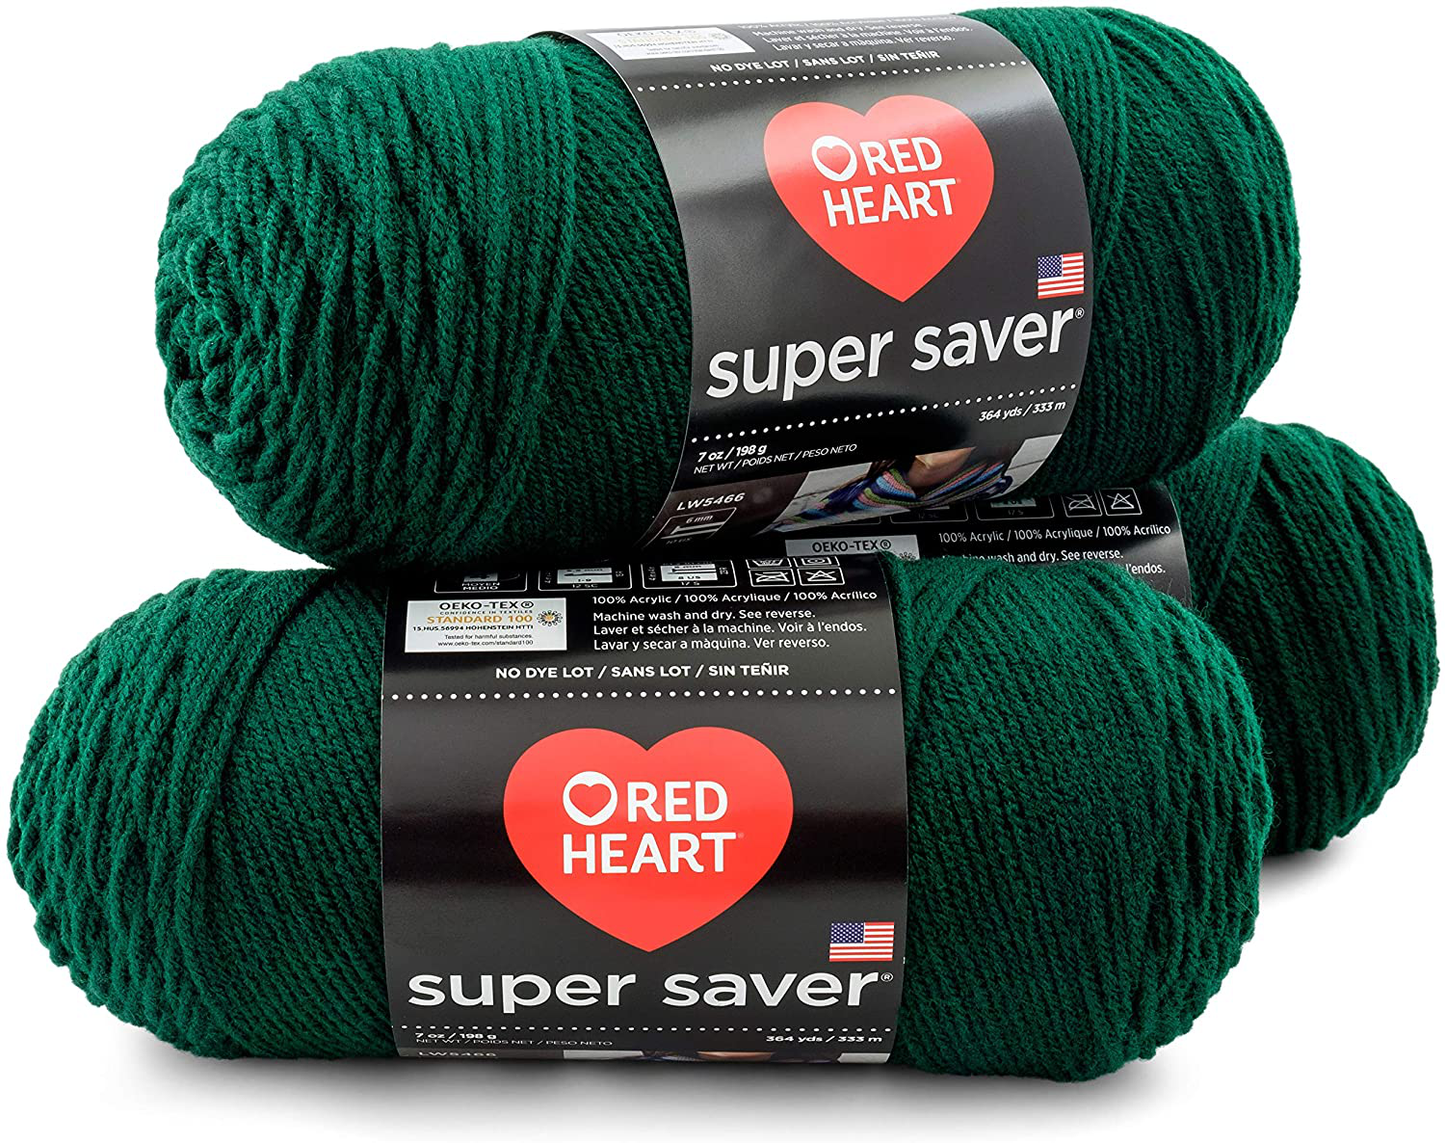 Super Saver 3-Pack Yarn